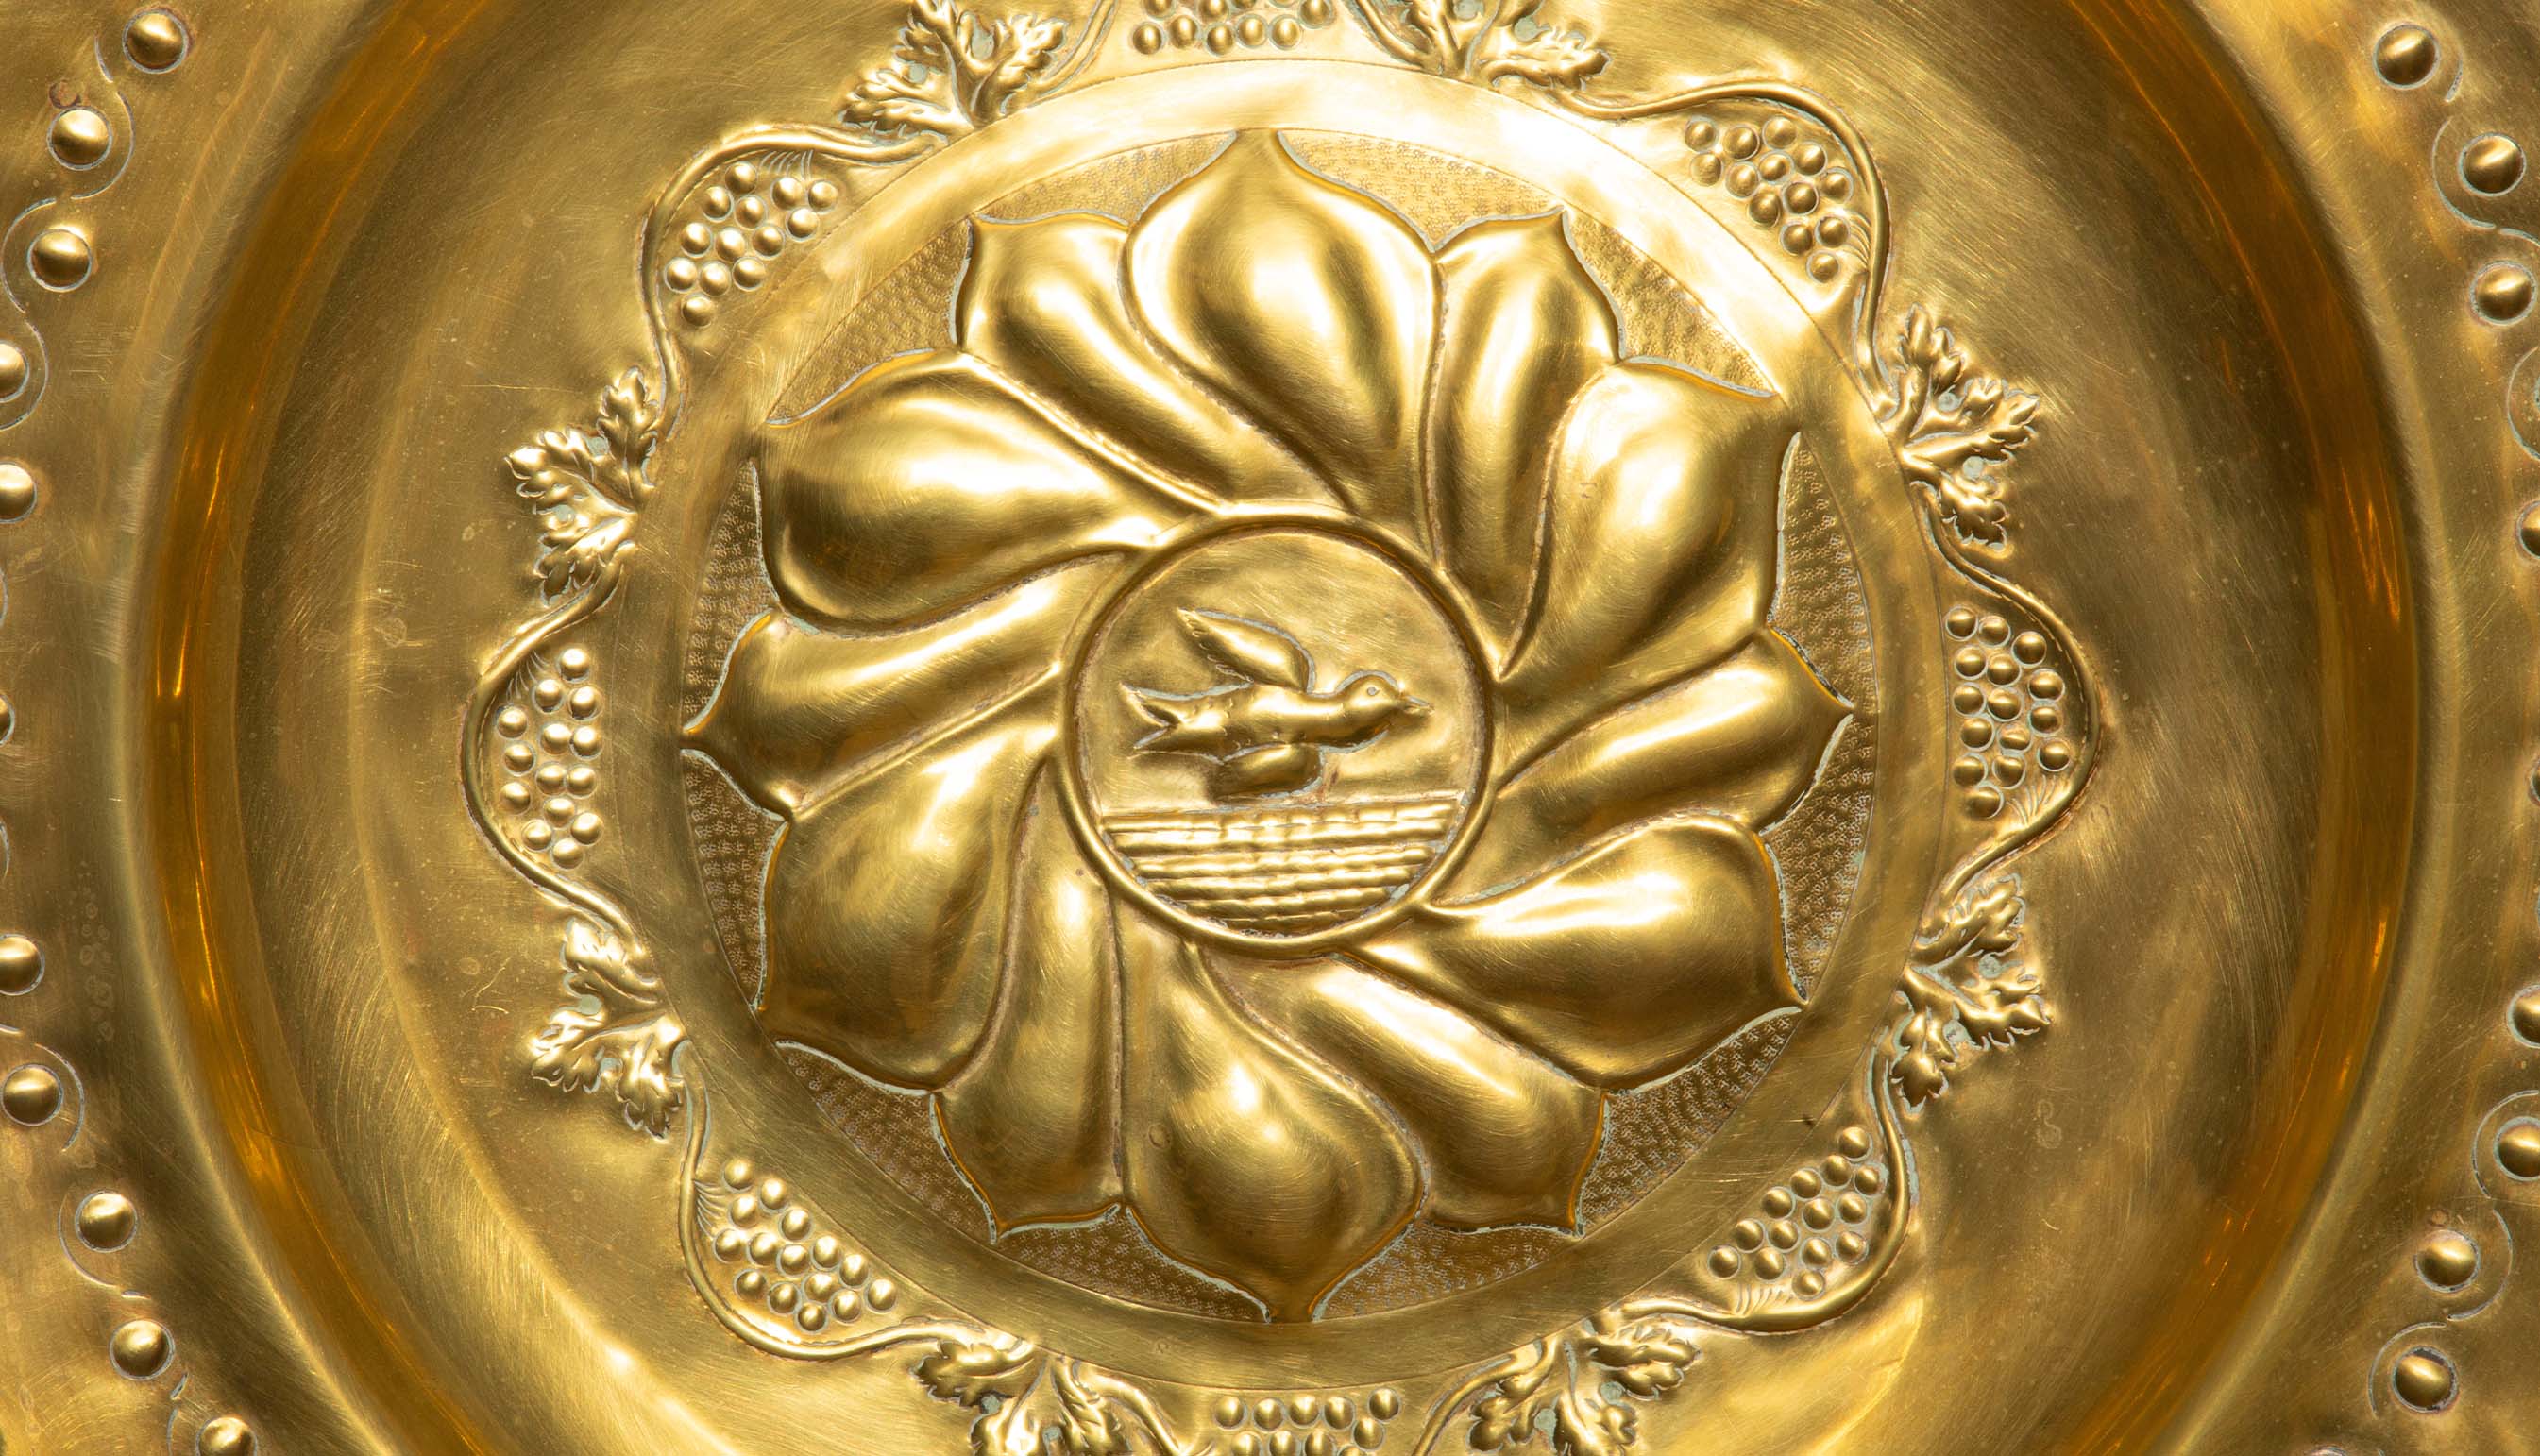 Antique 18/19th Century Ornamental Brass Alms Dish with Dove Motif (21.75